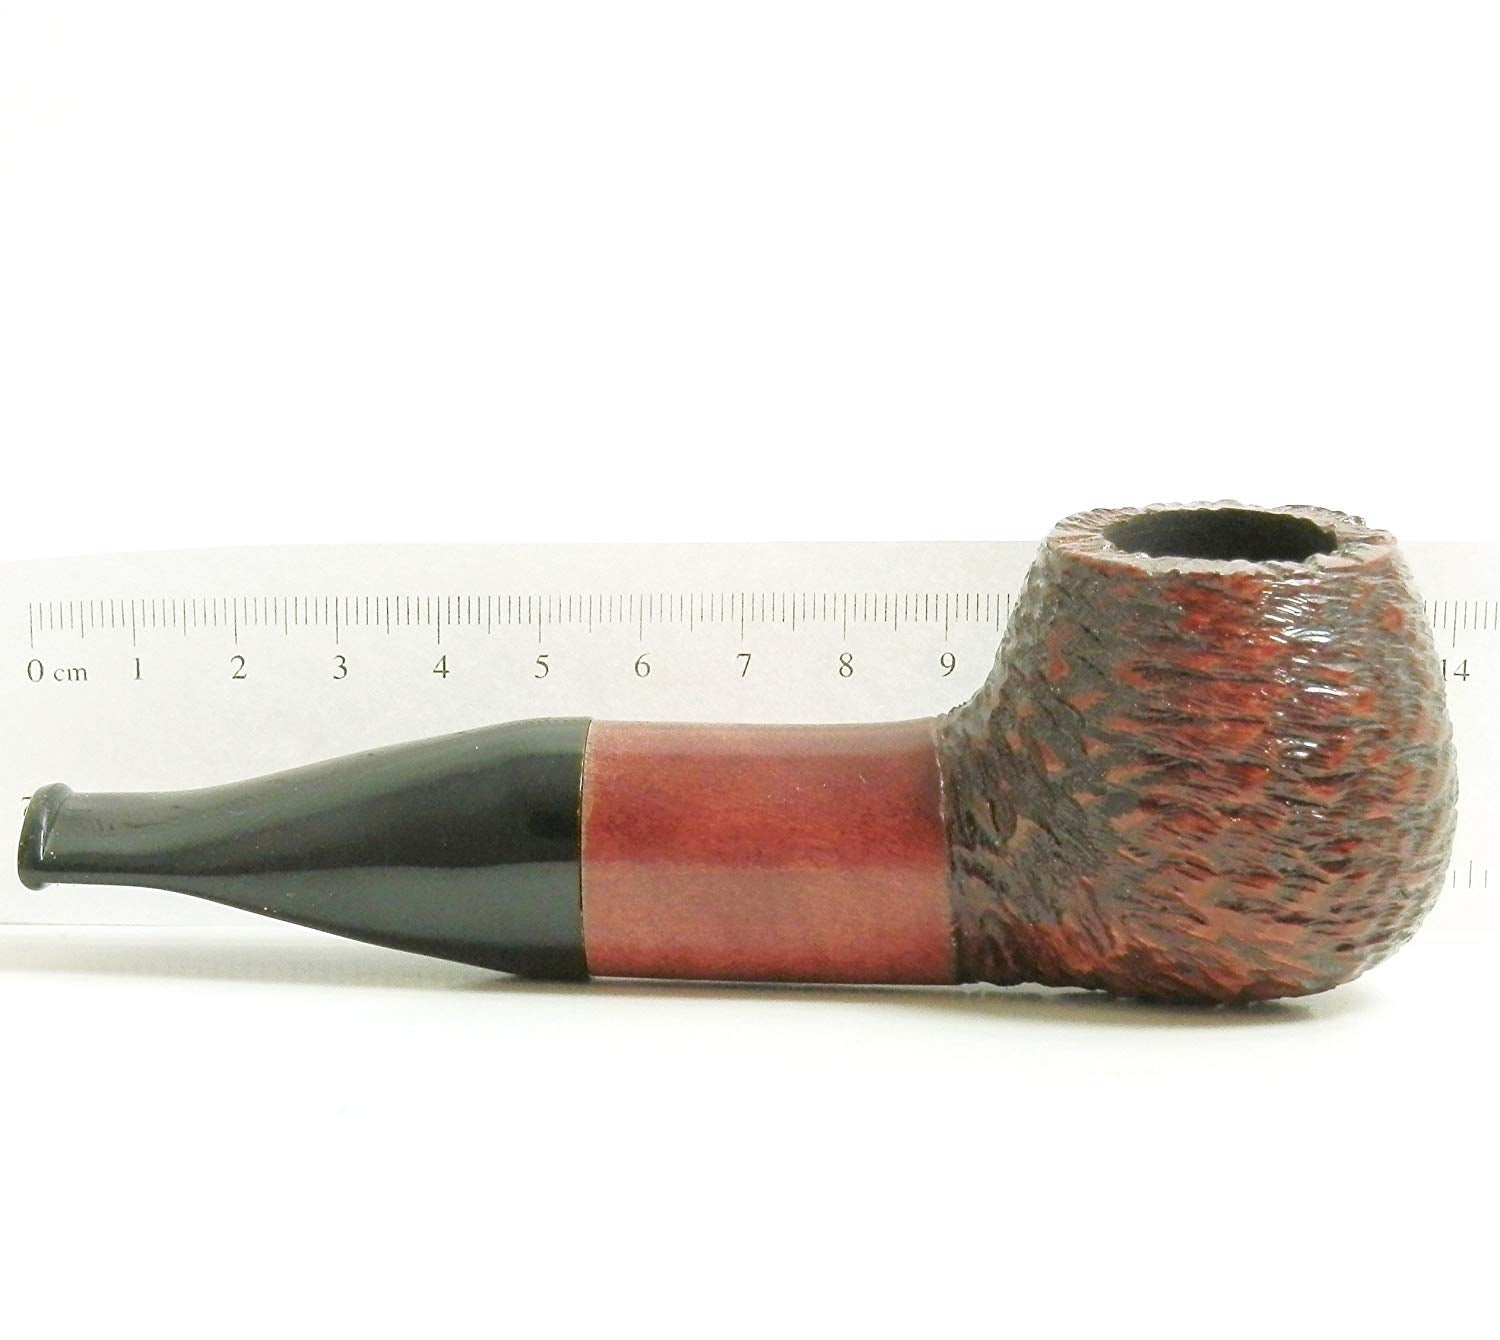 No. 34 Buldog Pear Wood Tobacco Pipe